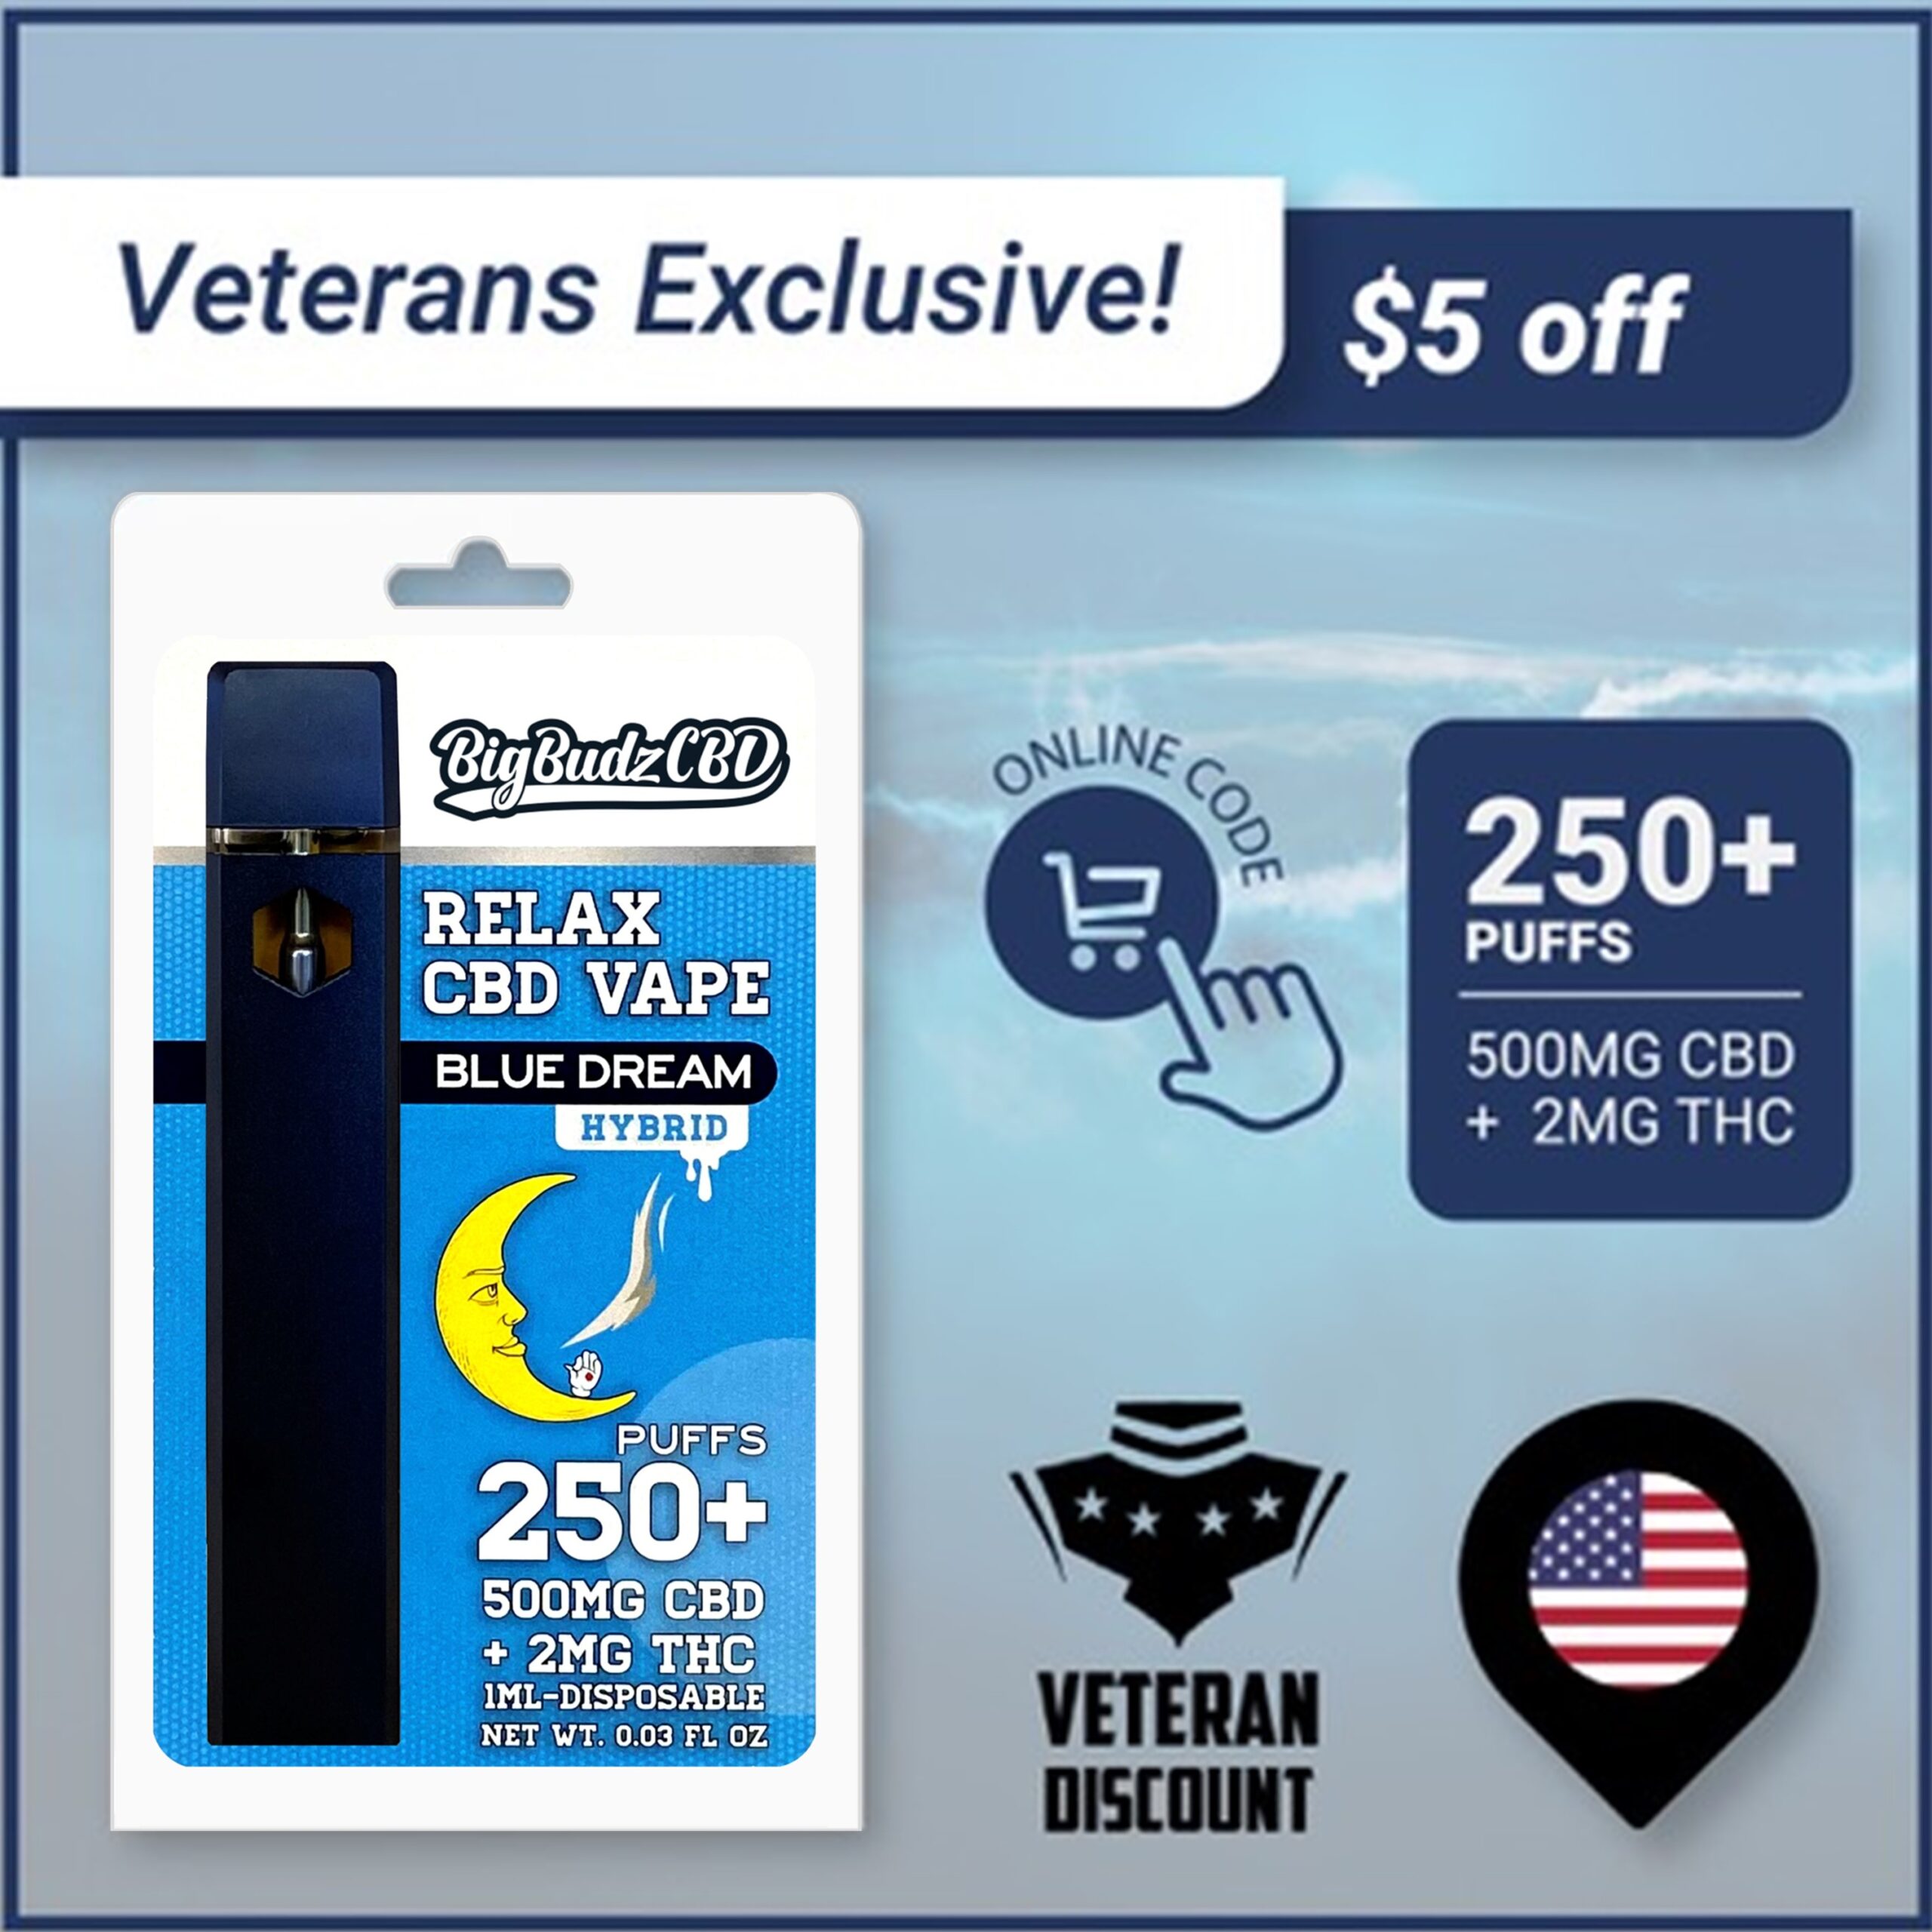 (veteran discount coupon) Blue Dream vape pen $5 off